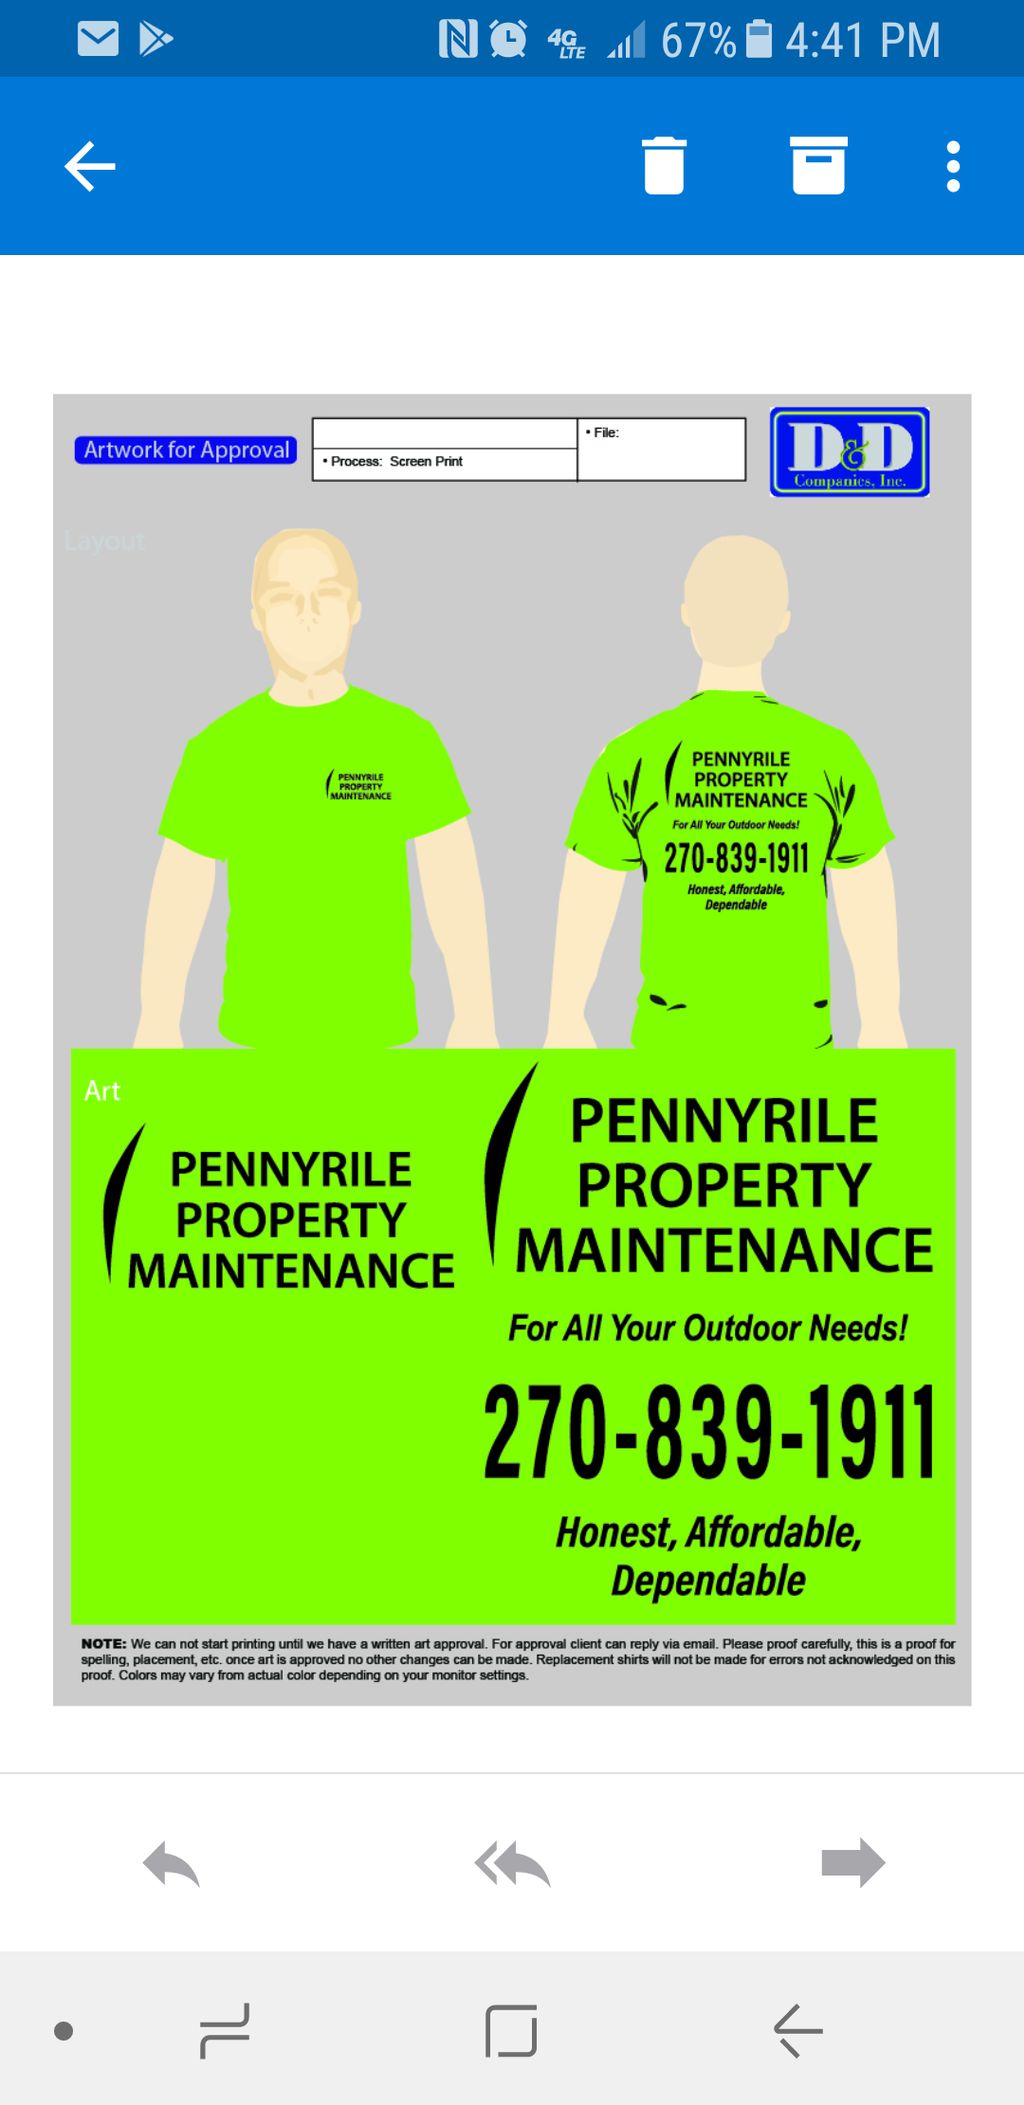 Pennyrile Property Maintenance